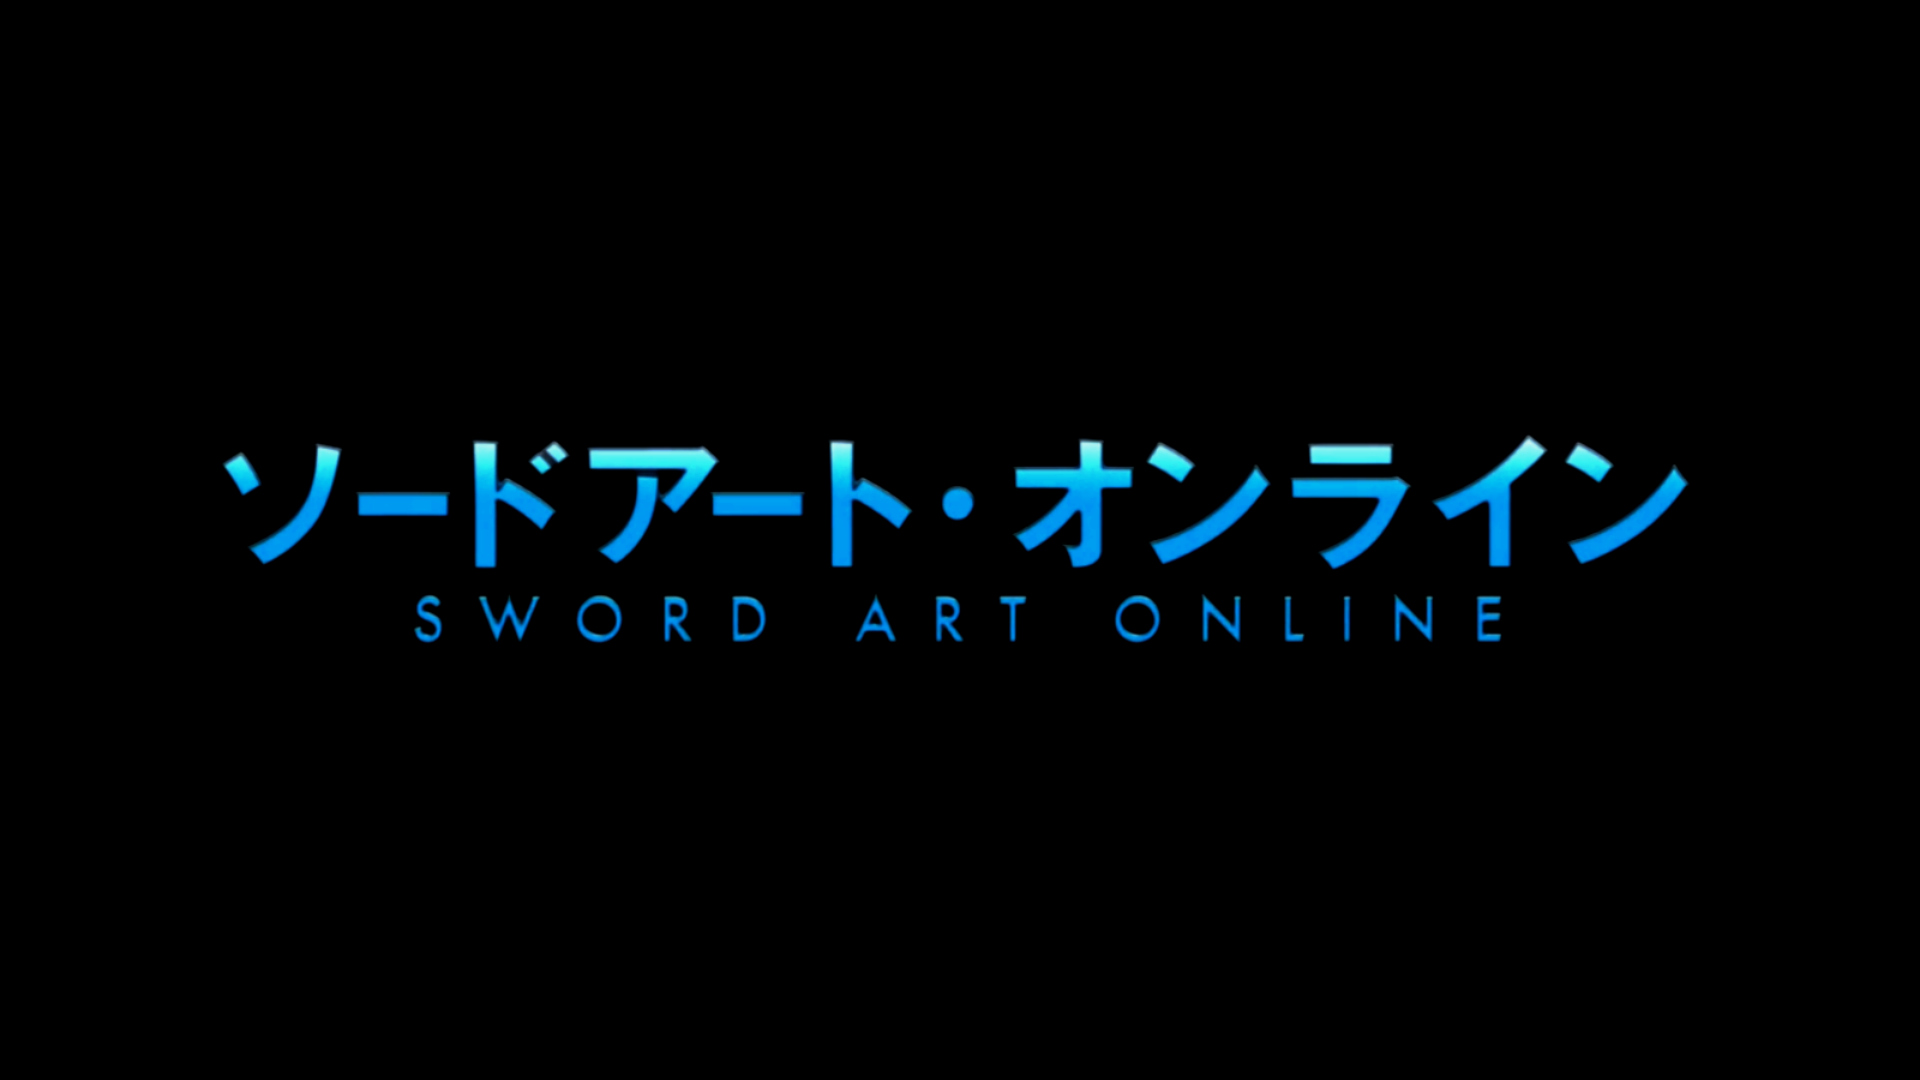 Wallpaper Of Sword Art Online You Are Ing